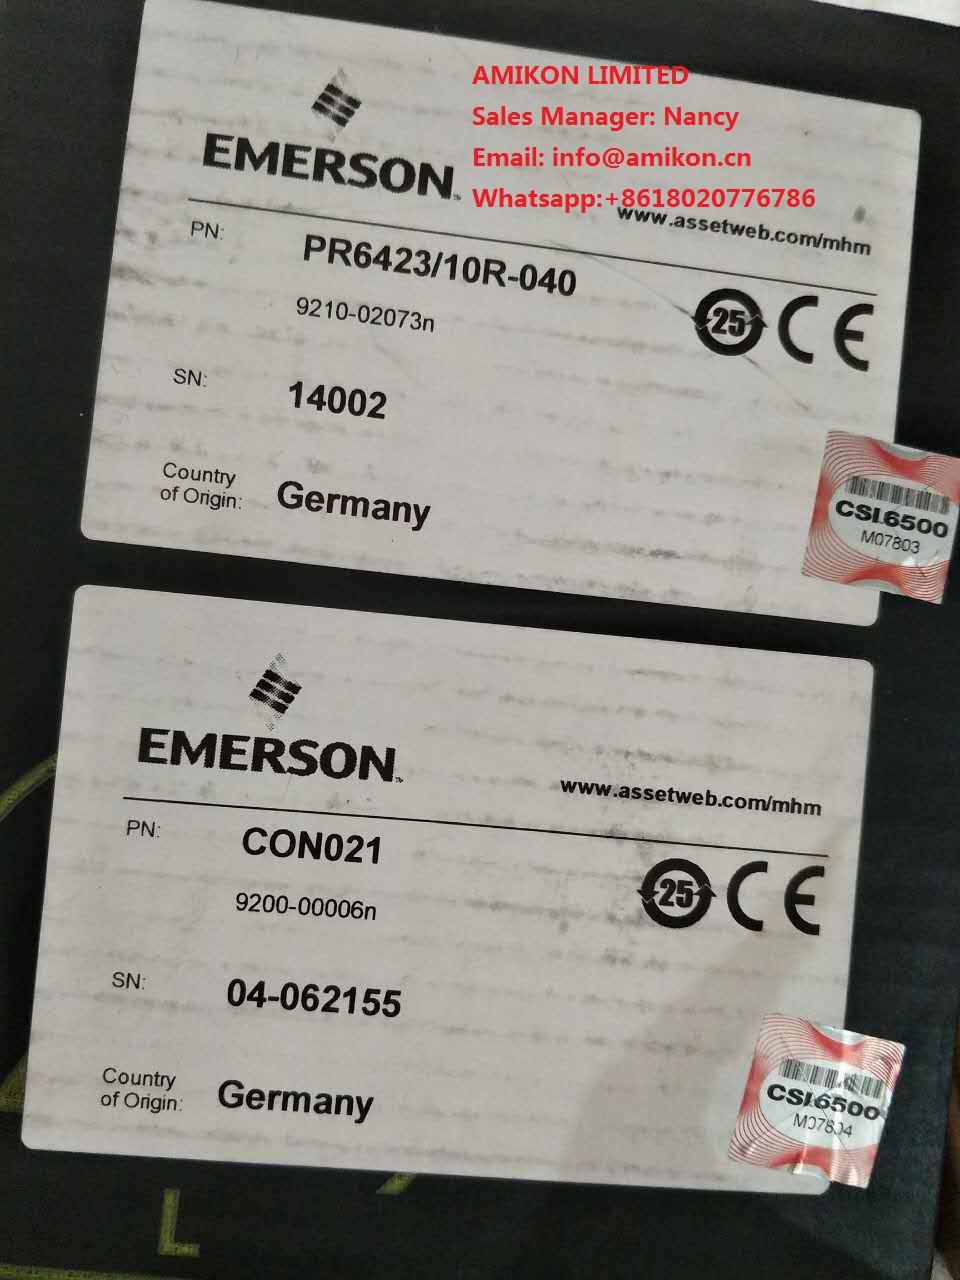 Emerson DeltaV DCS KJ2201X1-BA1 Logic Solver